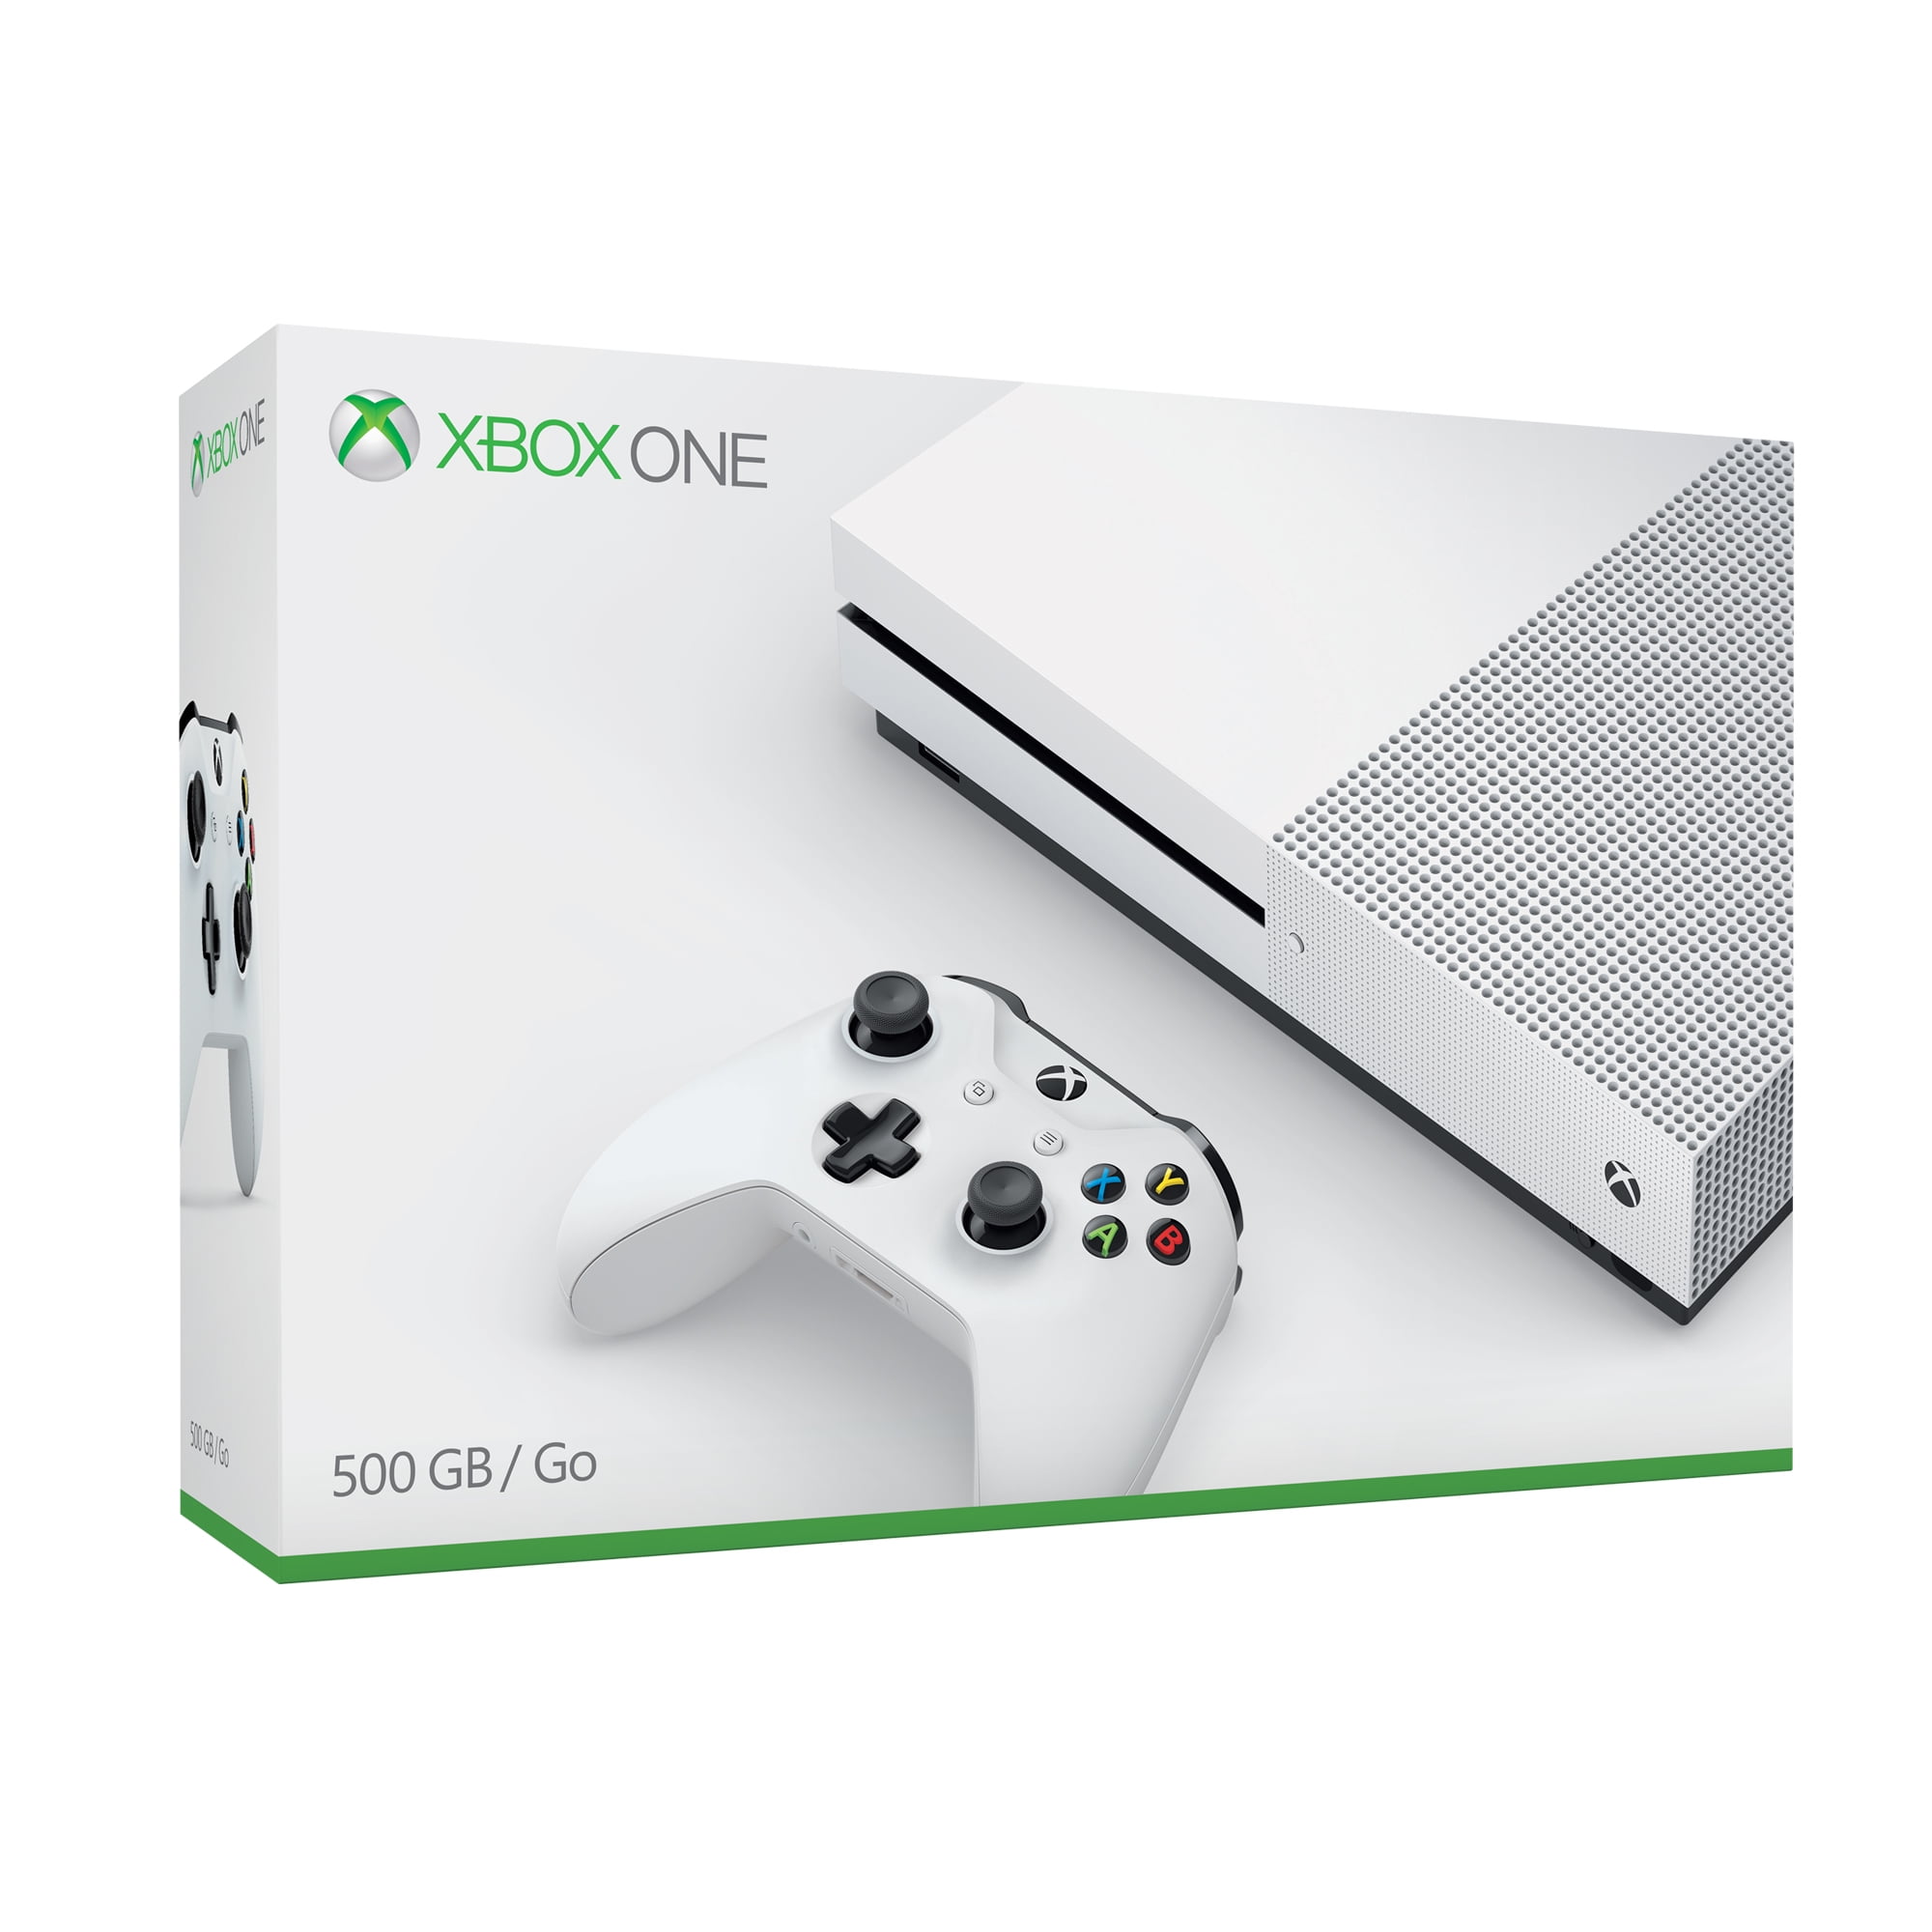 Beperken Toevallig Passend Restored Microsoft Xbox One S 500GB Console, White, ZQ9-00001 (Refurbished)  - Walmart.com